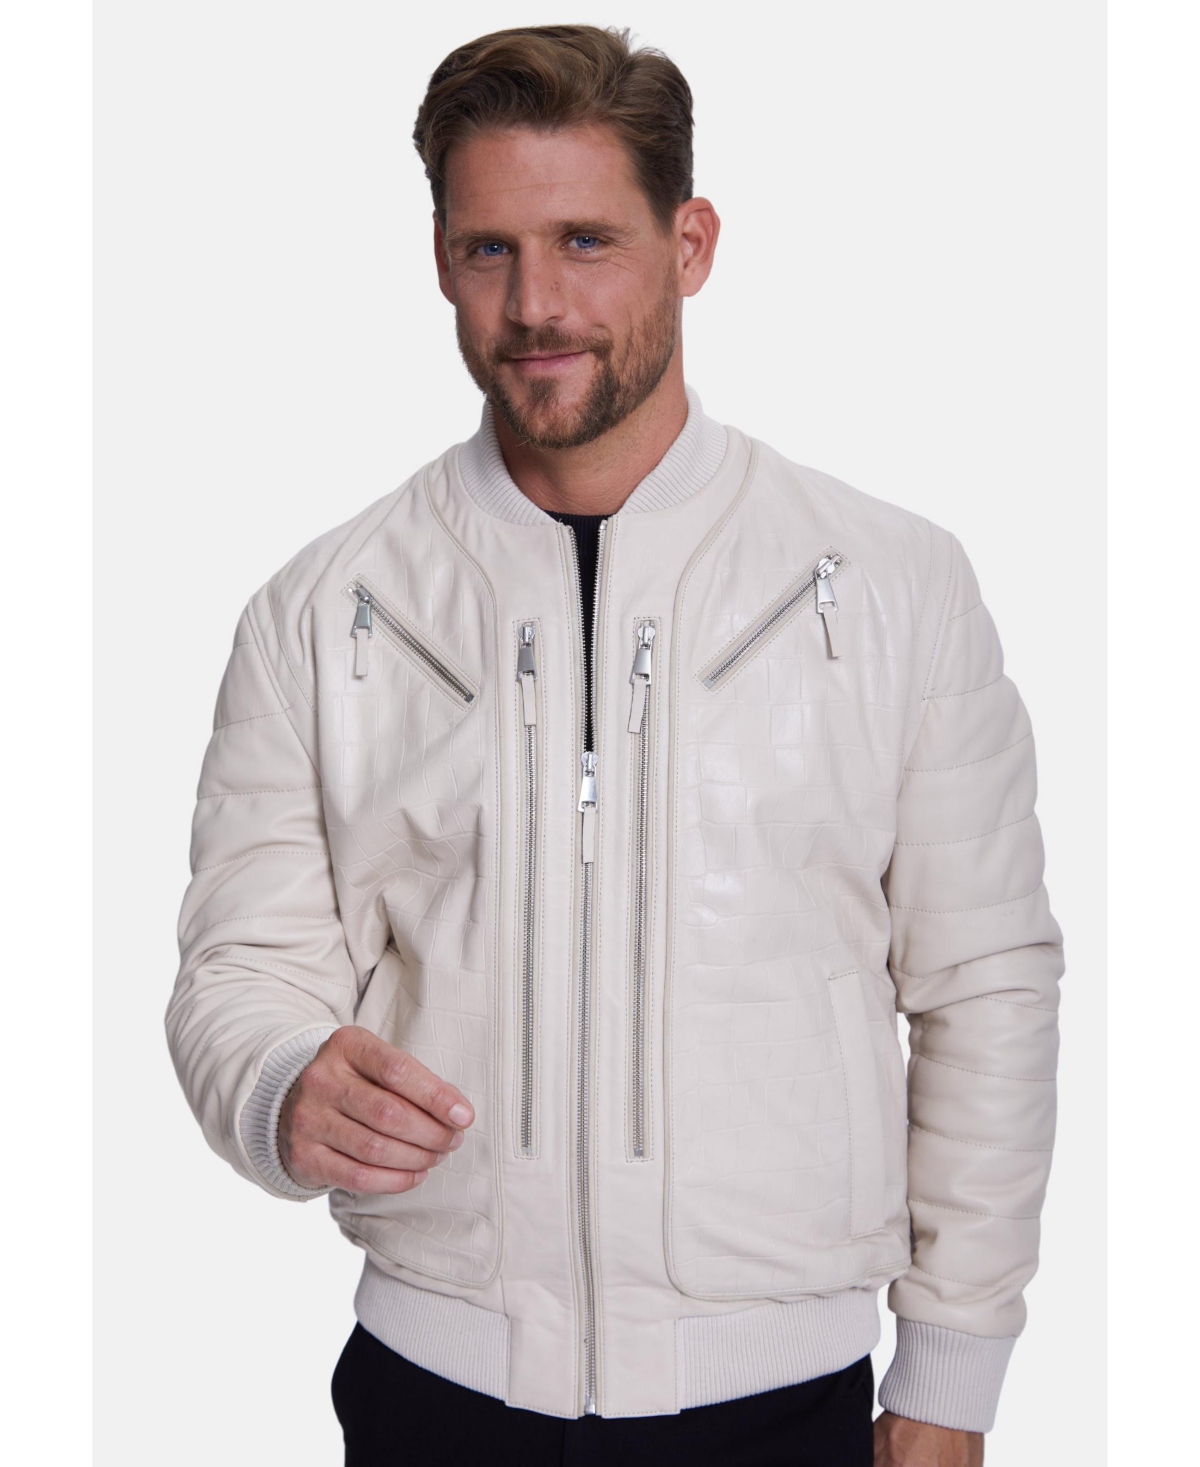 Men's Fashion Leather Jacket, Beige - Beige/khaki